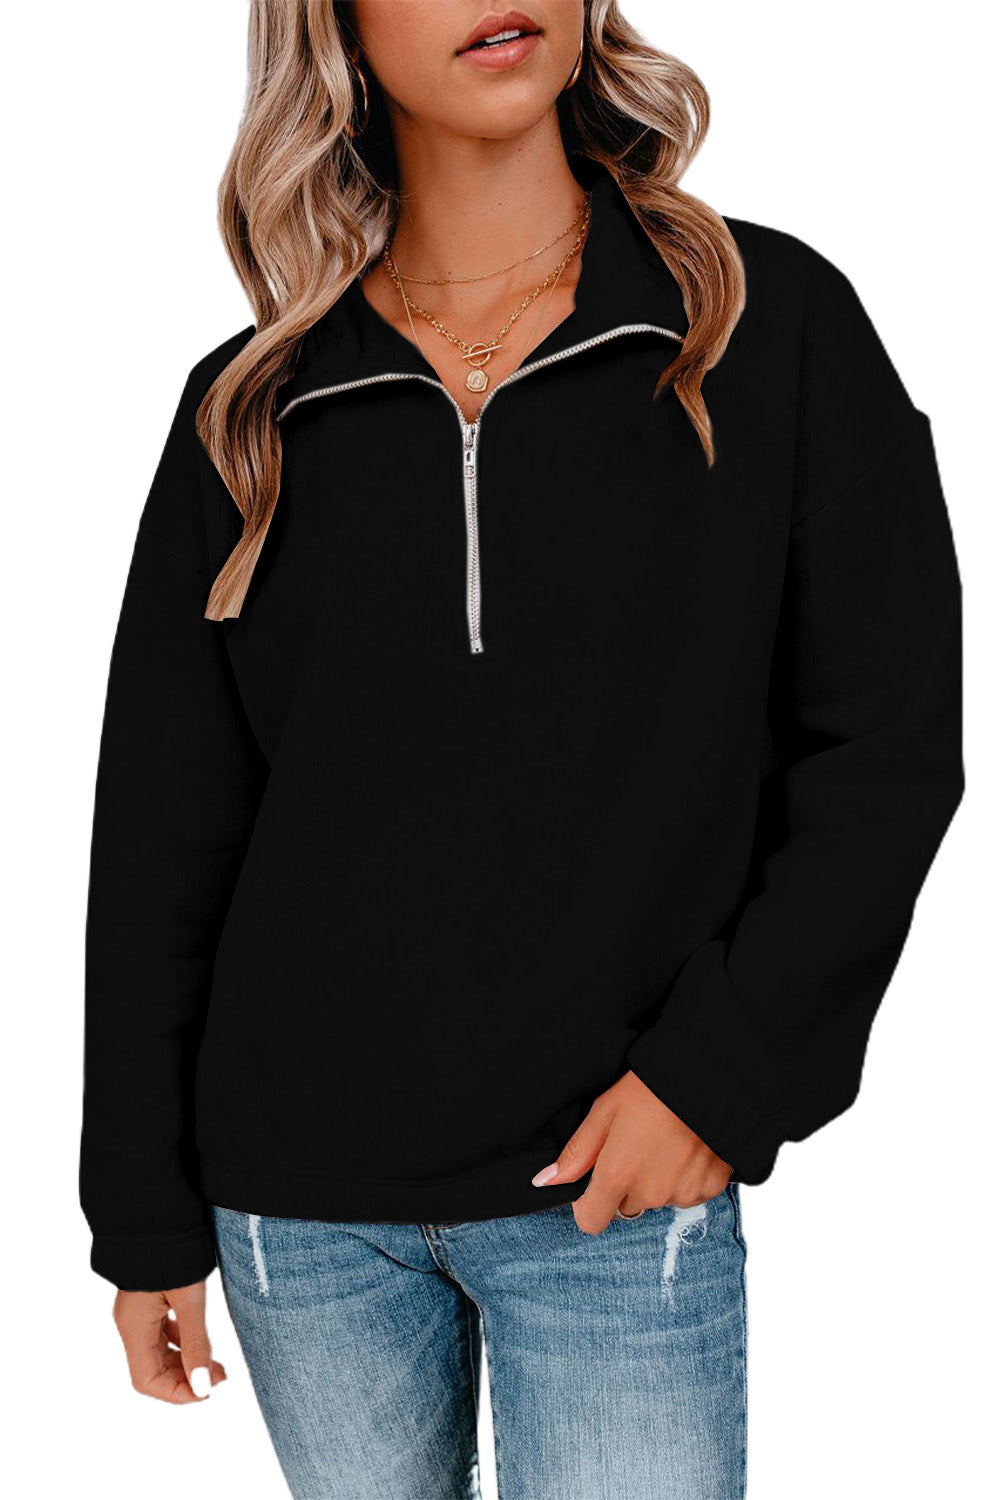 Black Black/Red/Pink/Gray/Brown Zipped Collar Sweatshirt LC2537889-2